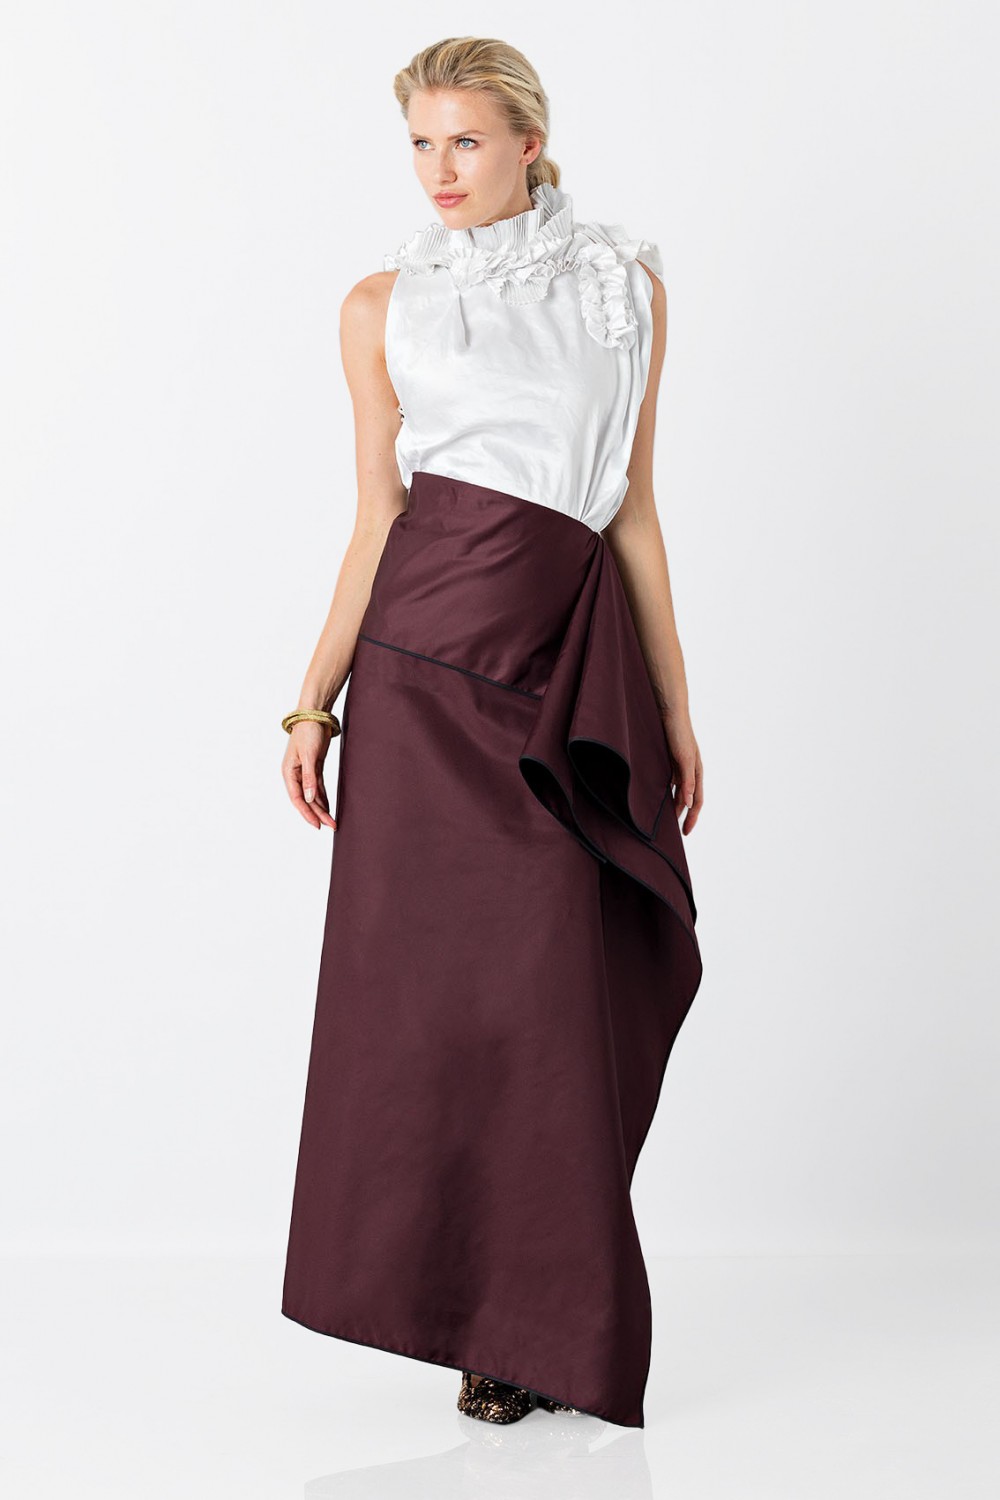 Bordeaux skirt with anterior drapery 